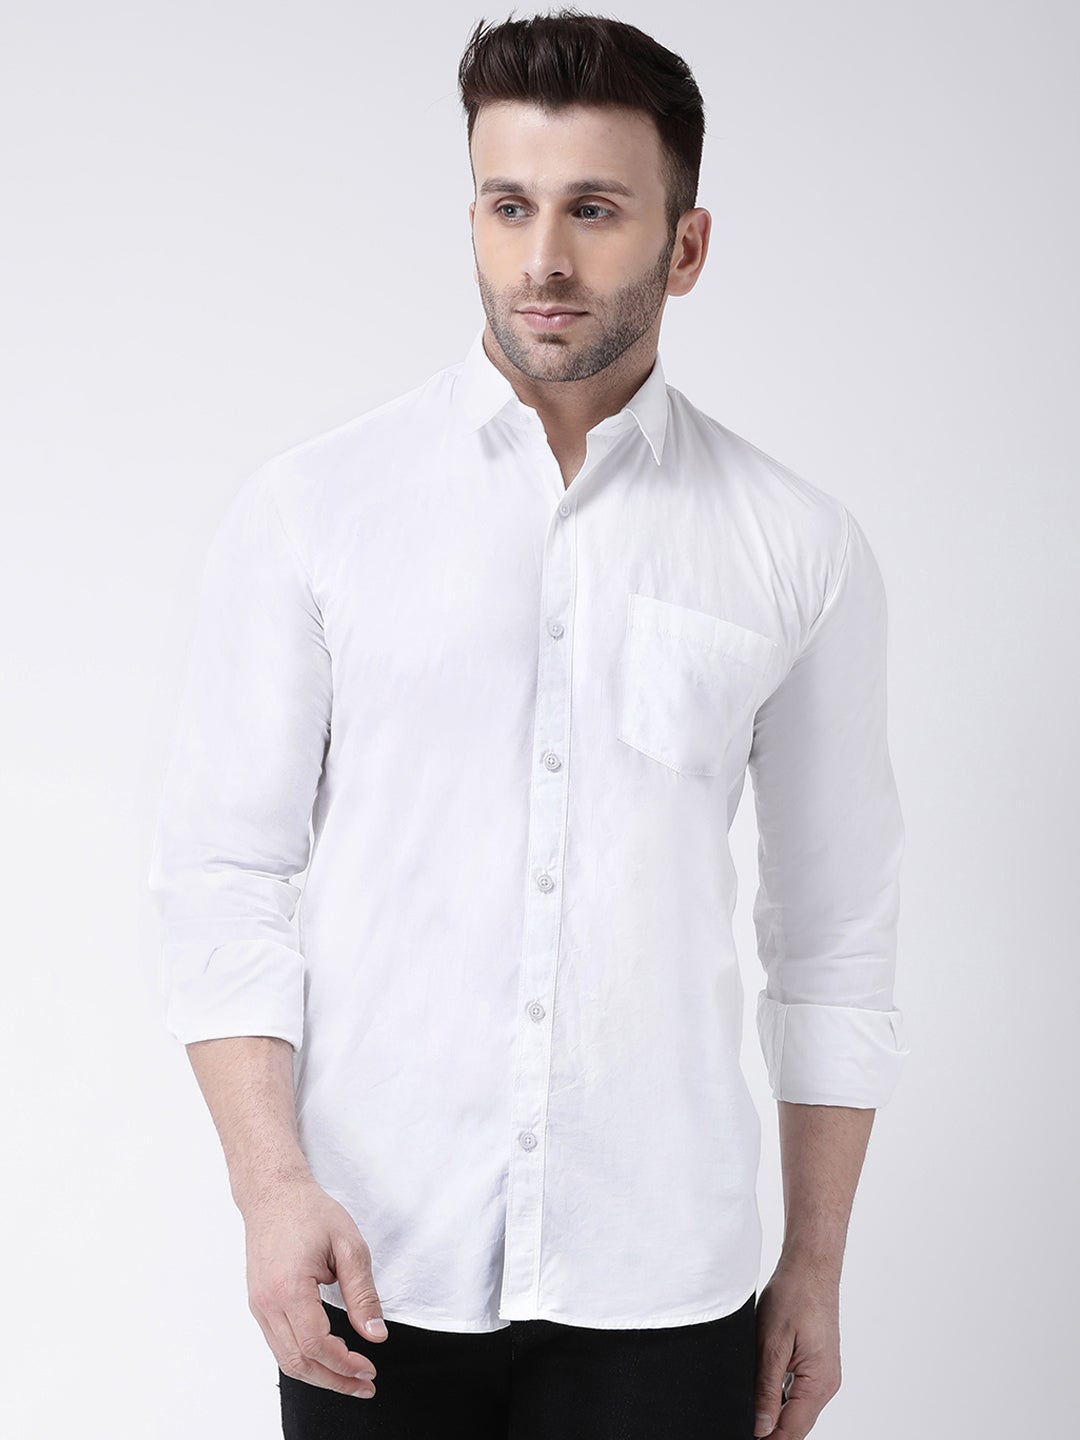 Men's Casual White Shirt